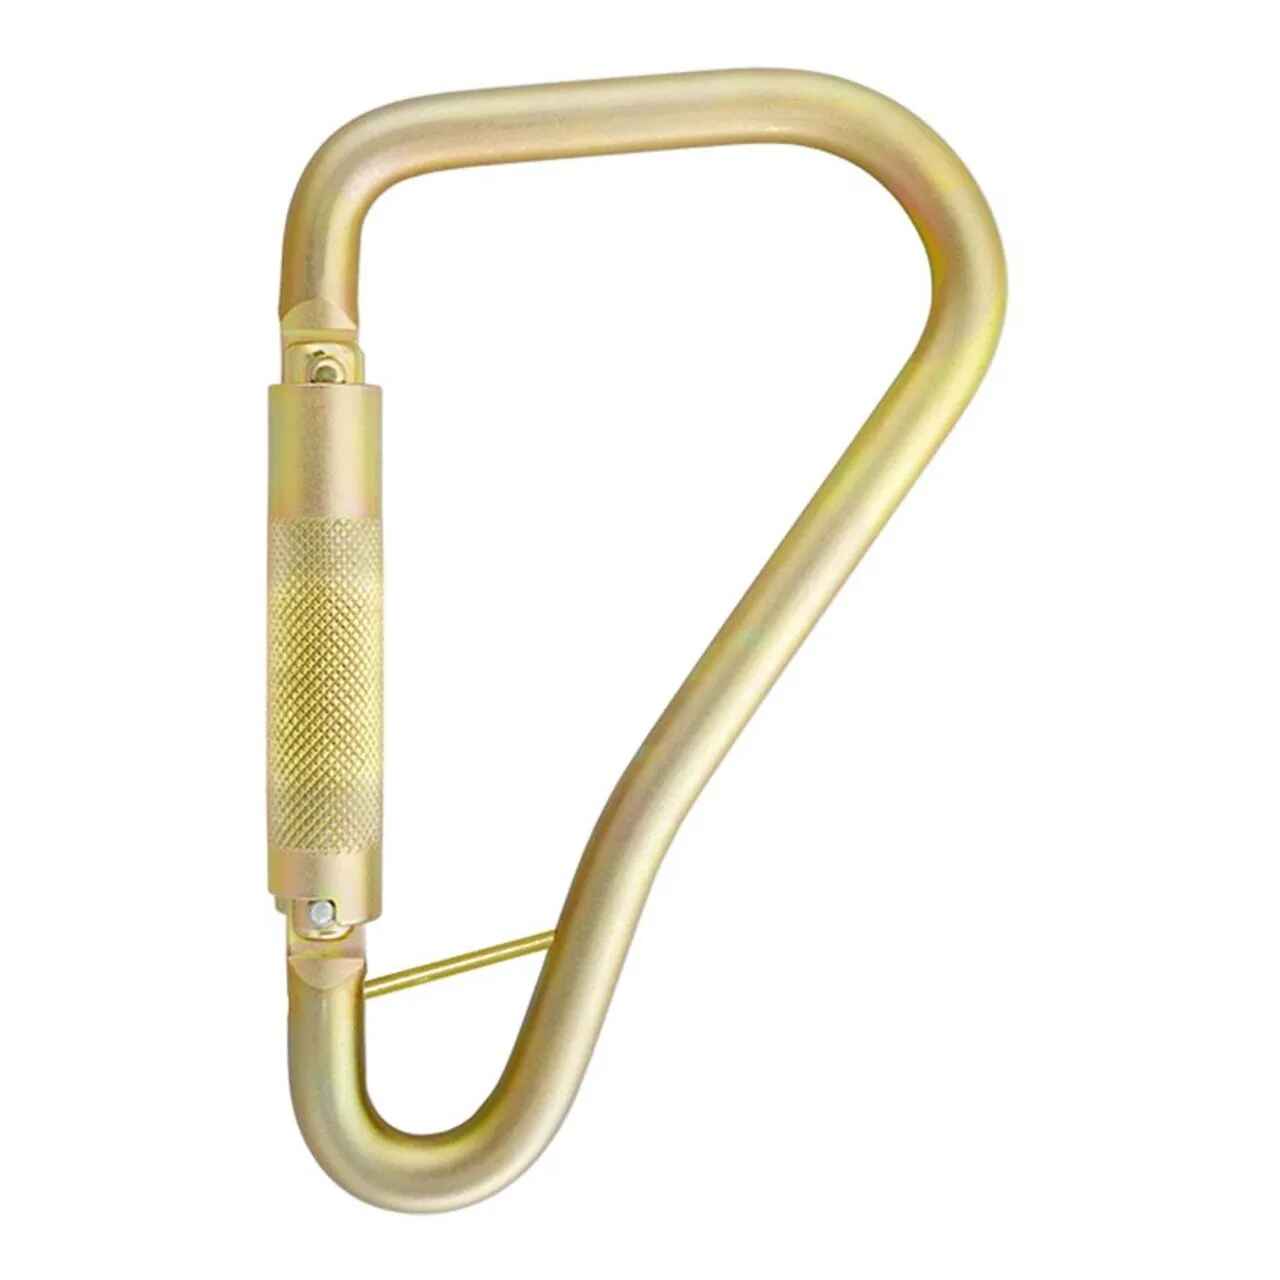 Forged Steel Twist Lock Hook Carabiner - Defender Safety